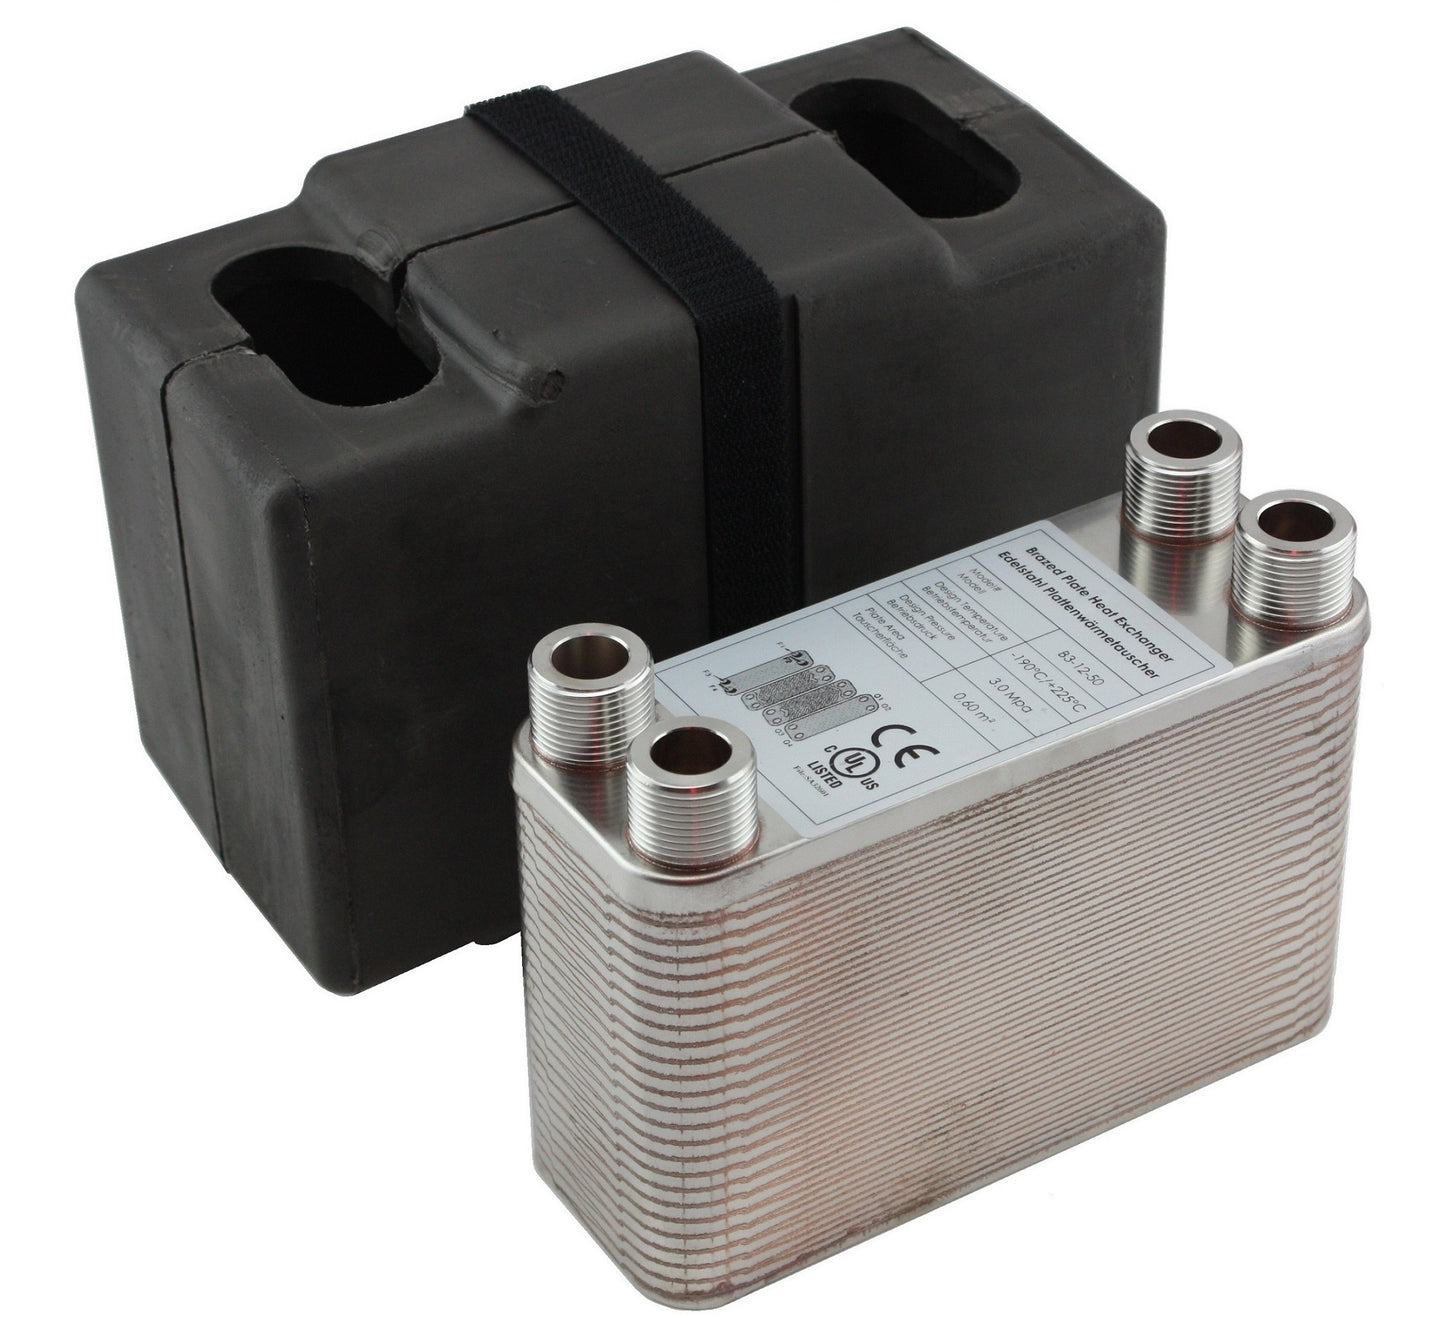 Intercambiador de calor de placas B3-12-50 - 90kW, 50 placas